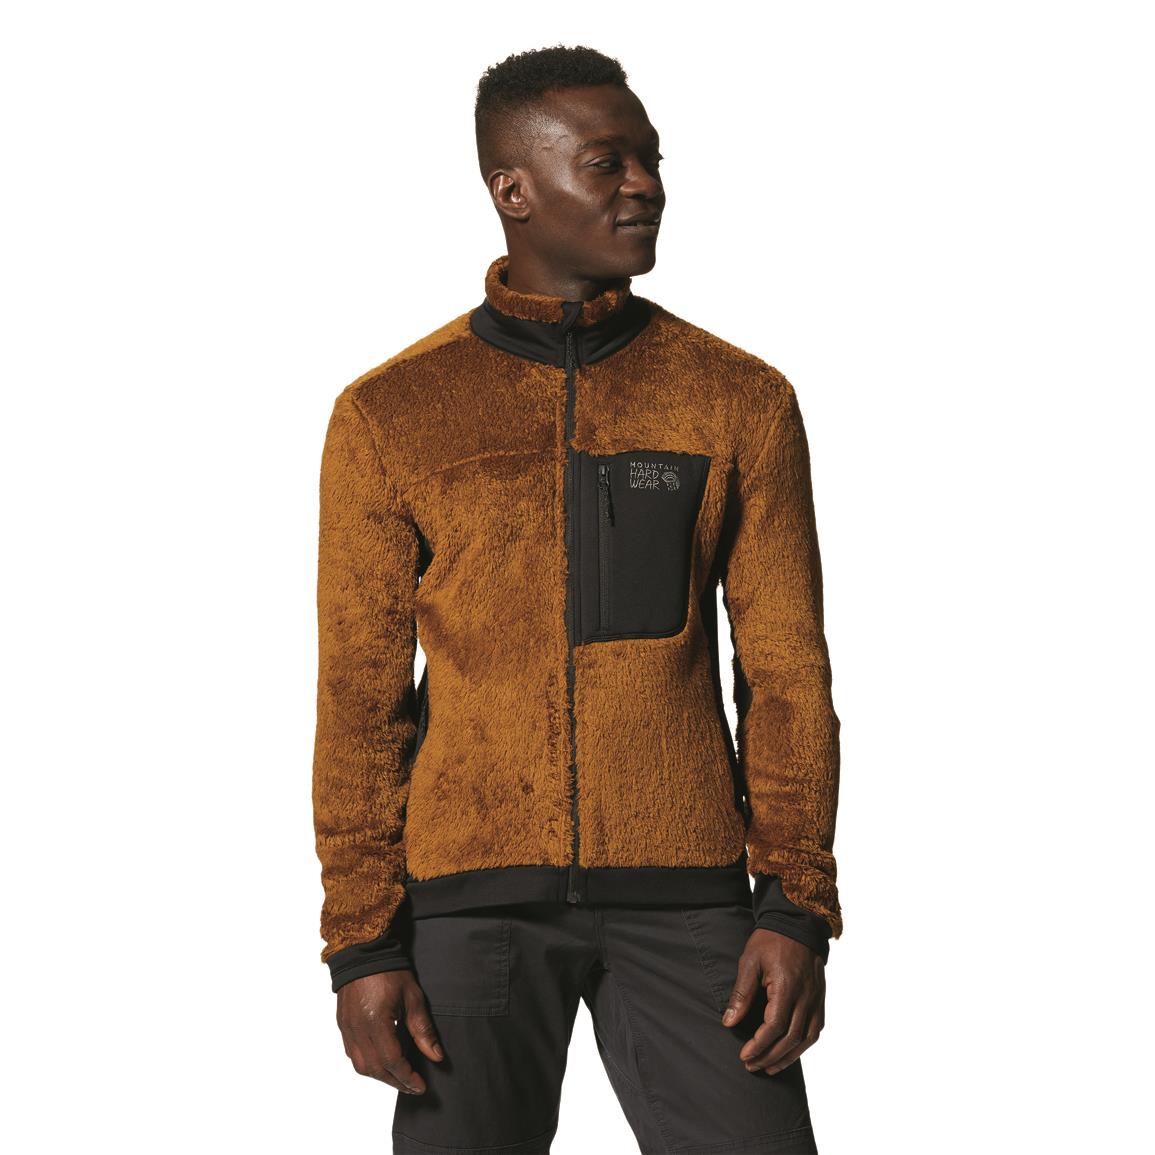 Mountain Hardwear Men's Polartec High Loft Jacket, Golden Brown